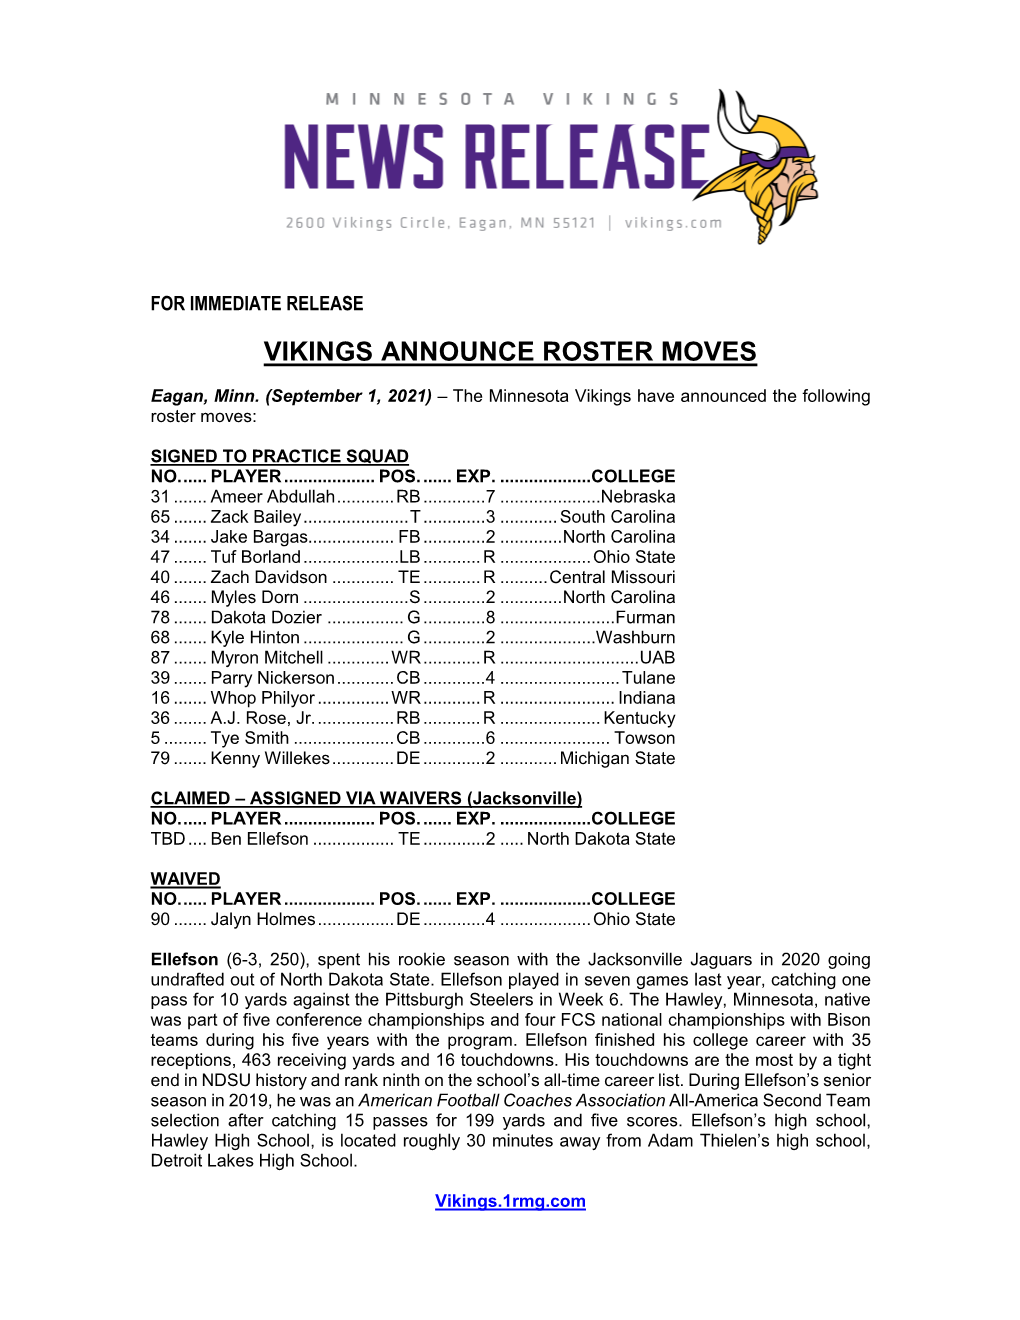 Vikings Announce Roster Moves